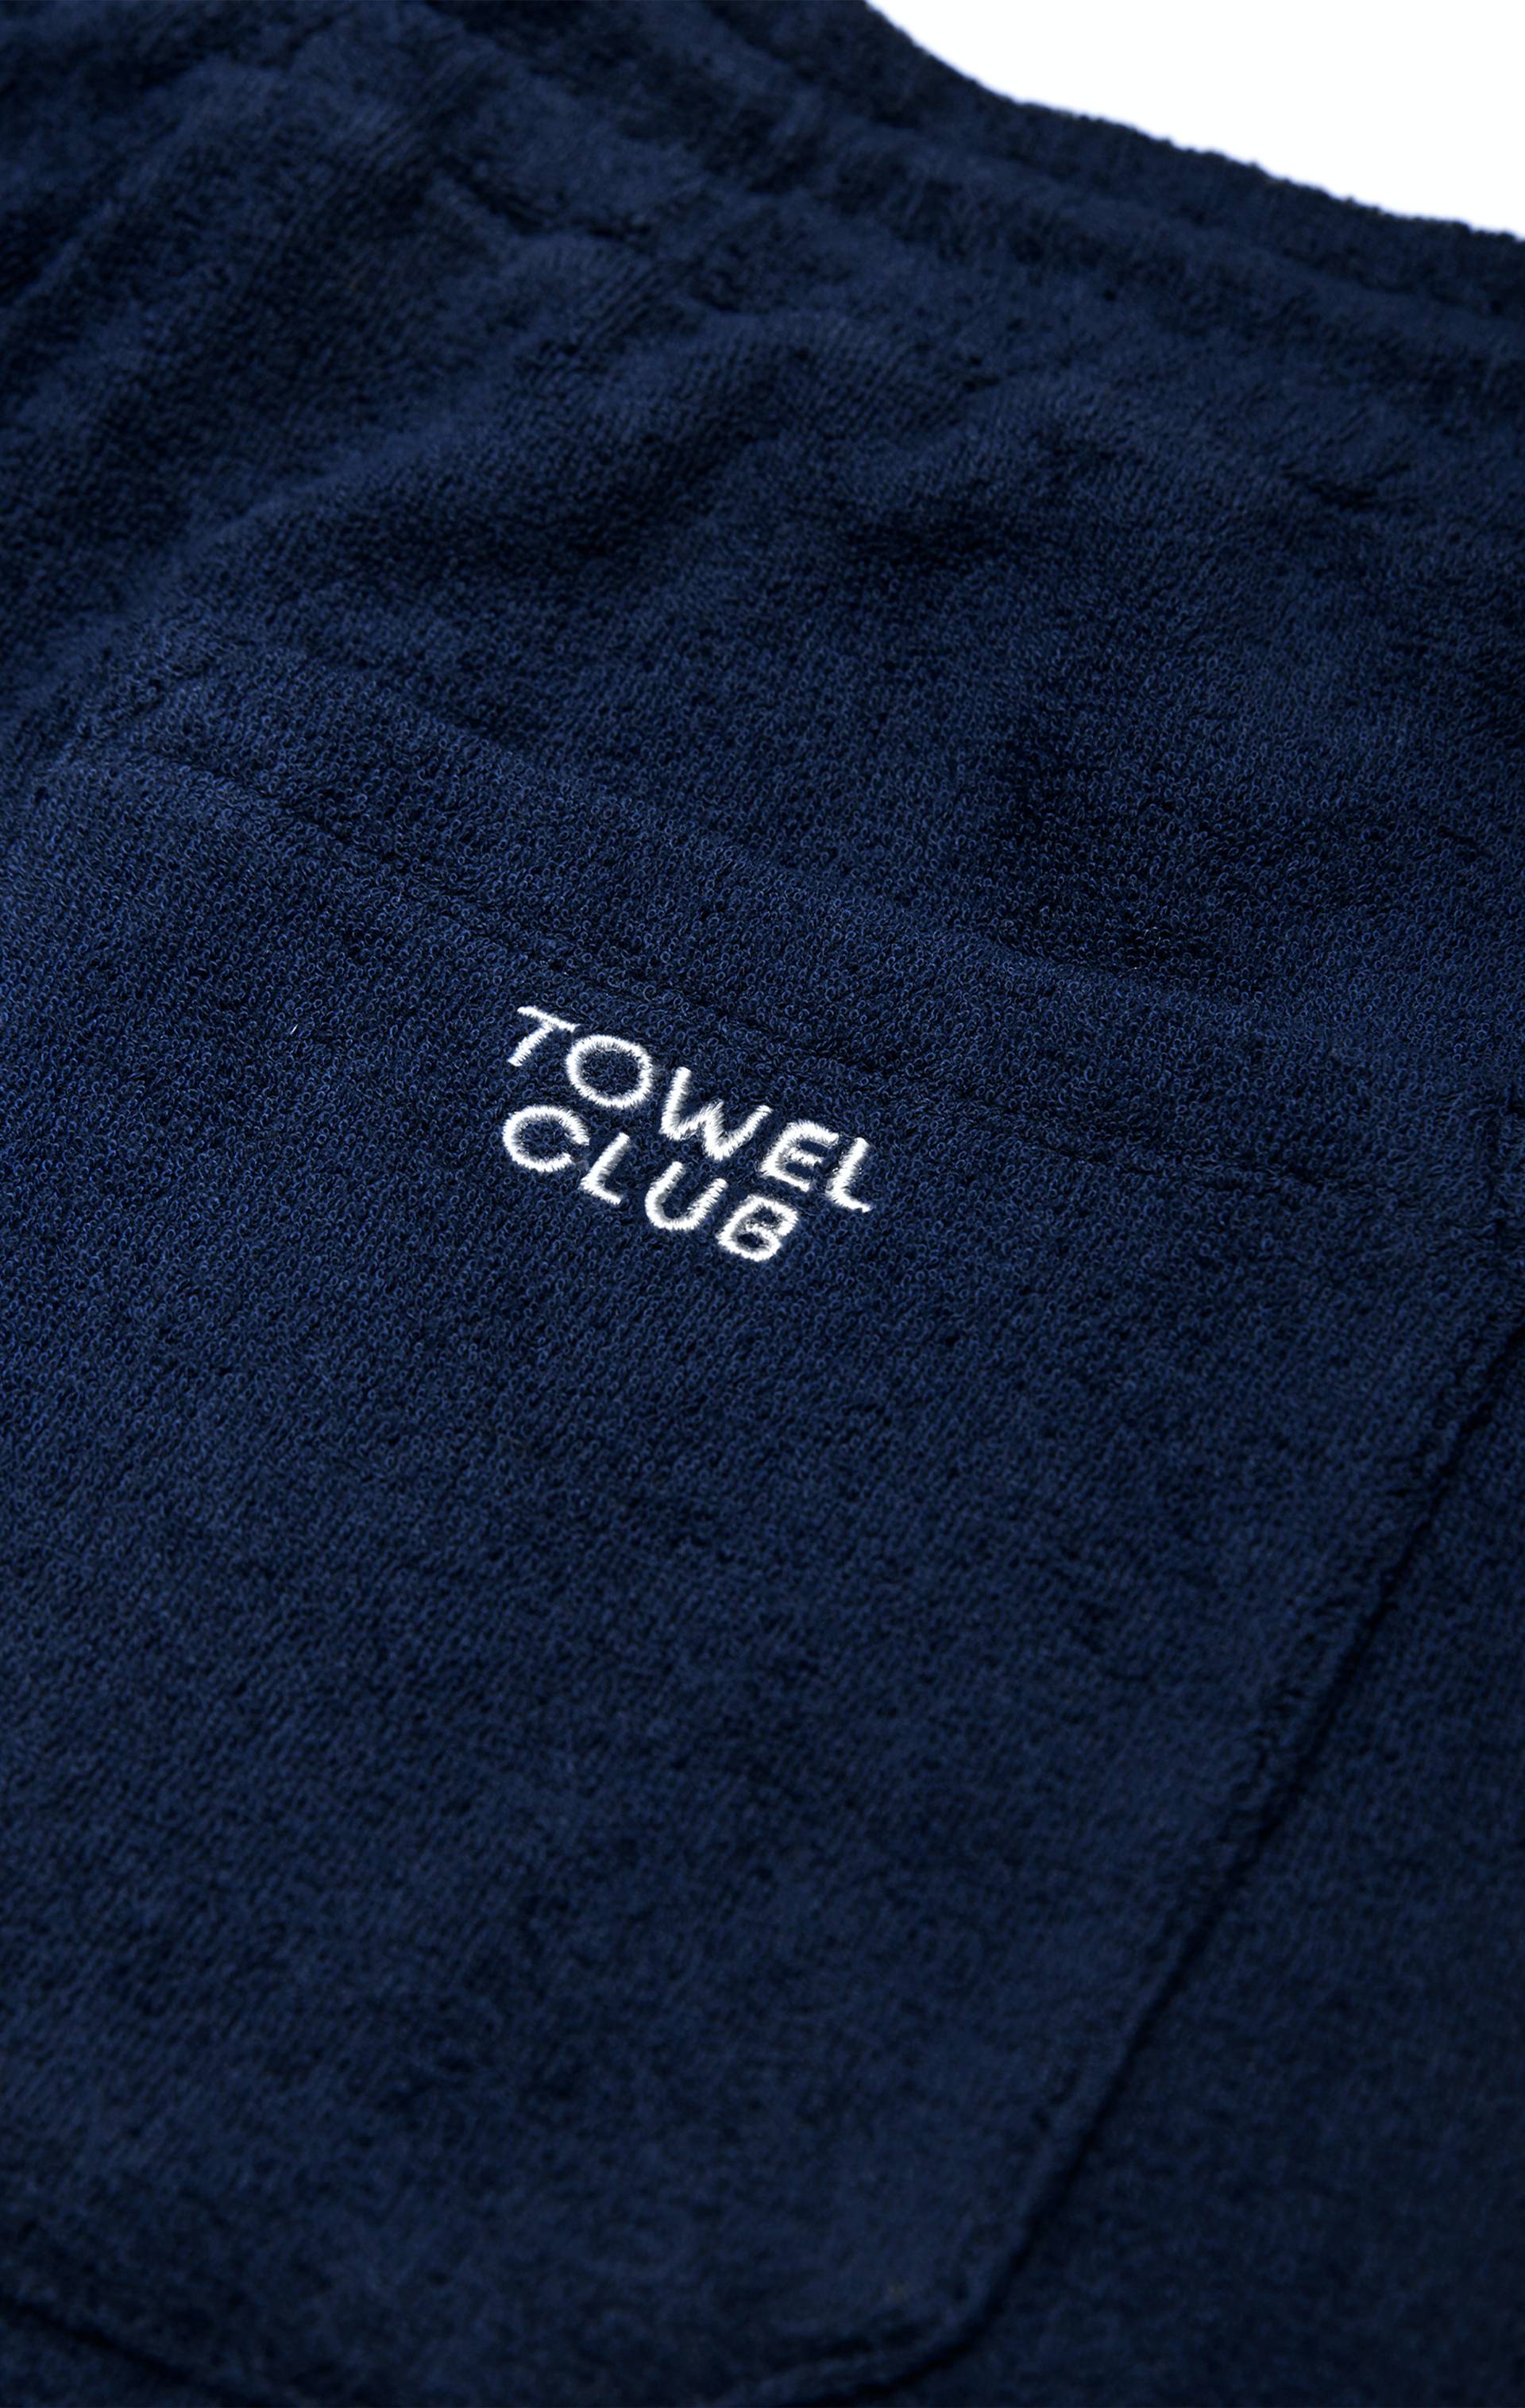 Onepiece Towel Club Shorts Navy - 3